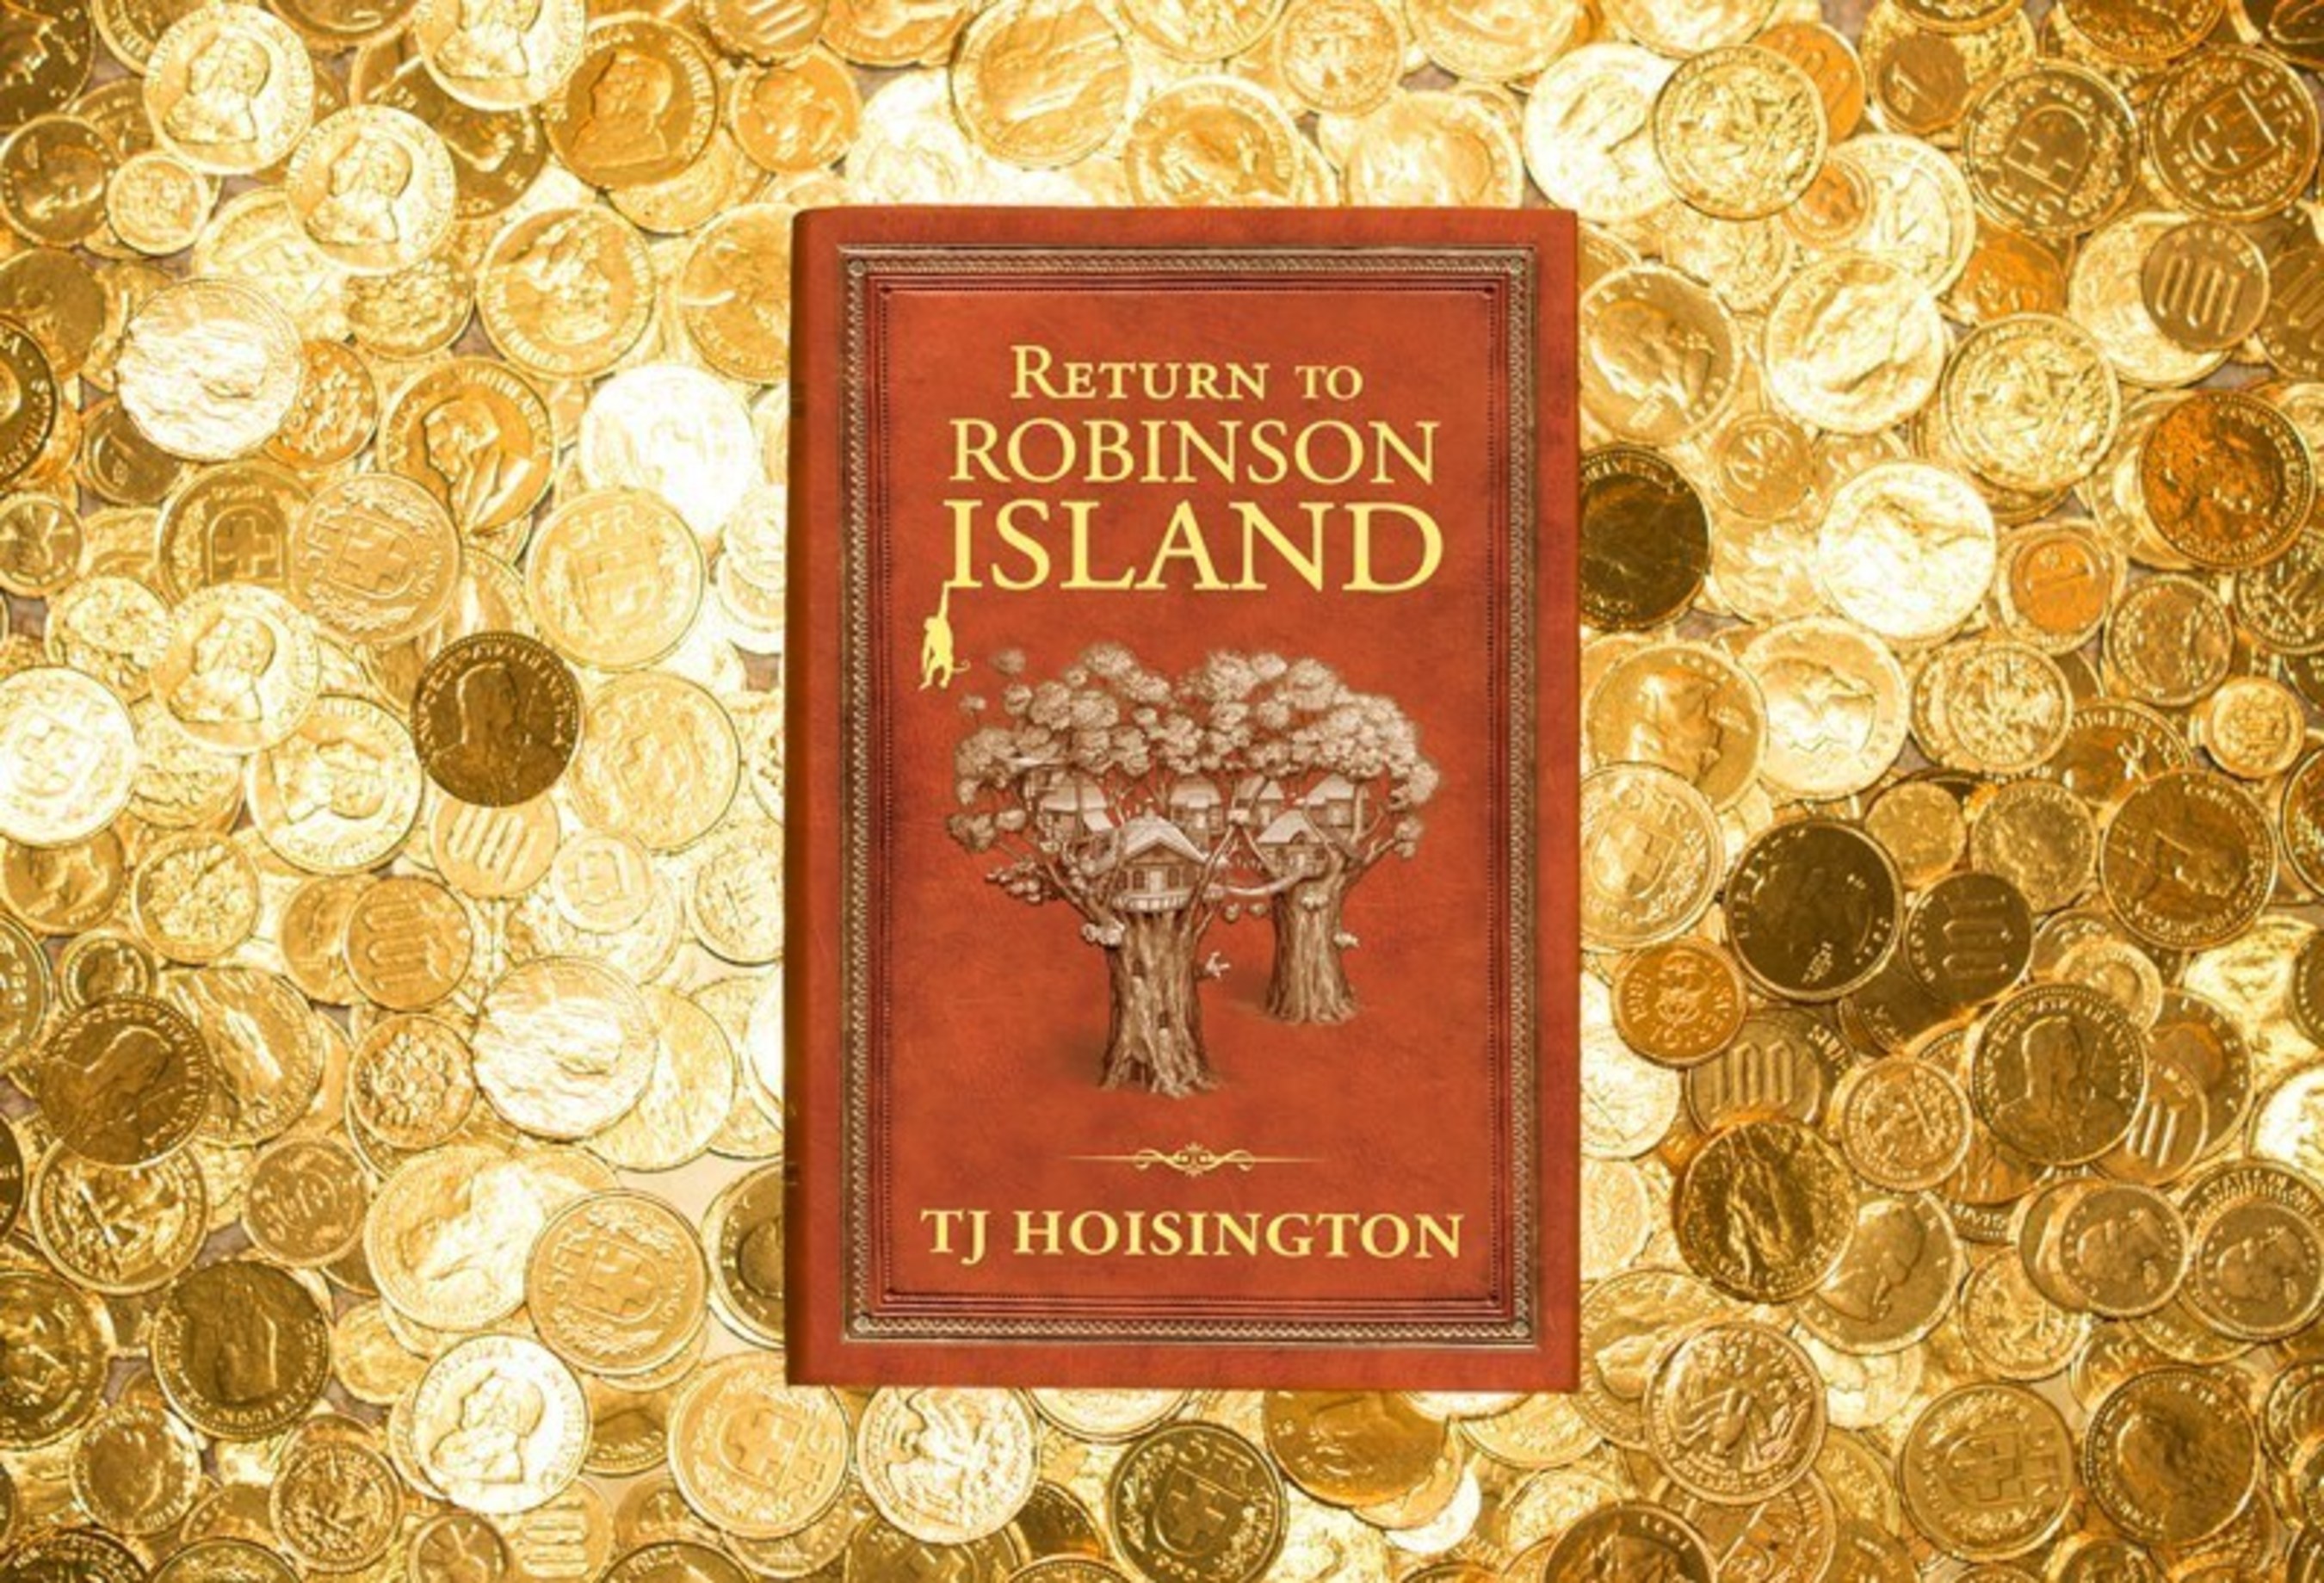 Return to Robinson Island laying on treasure